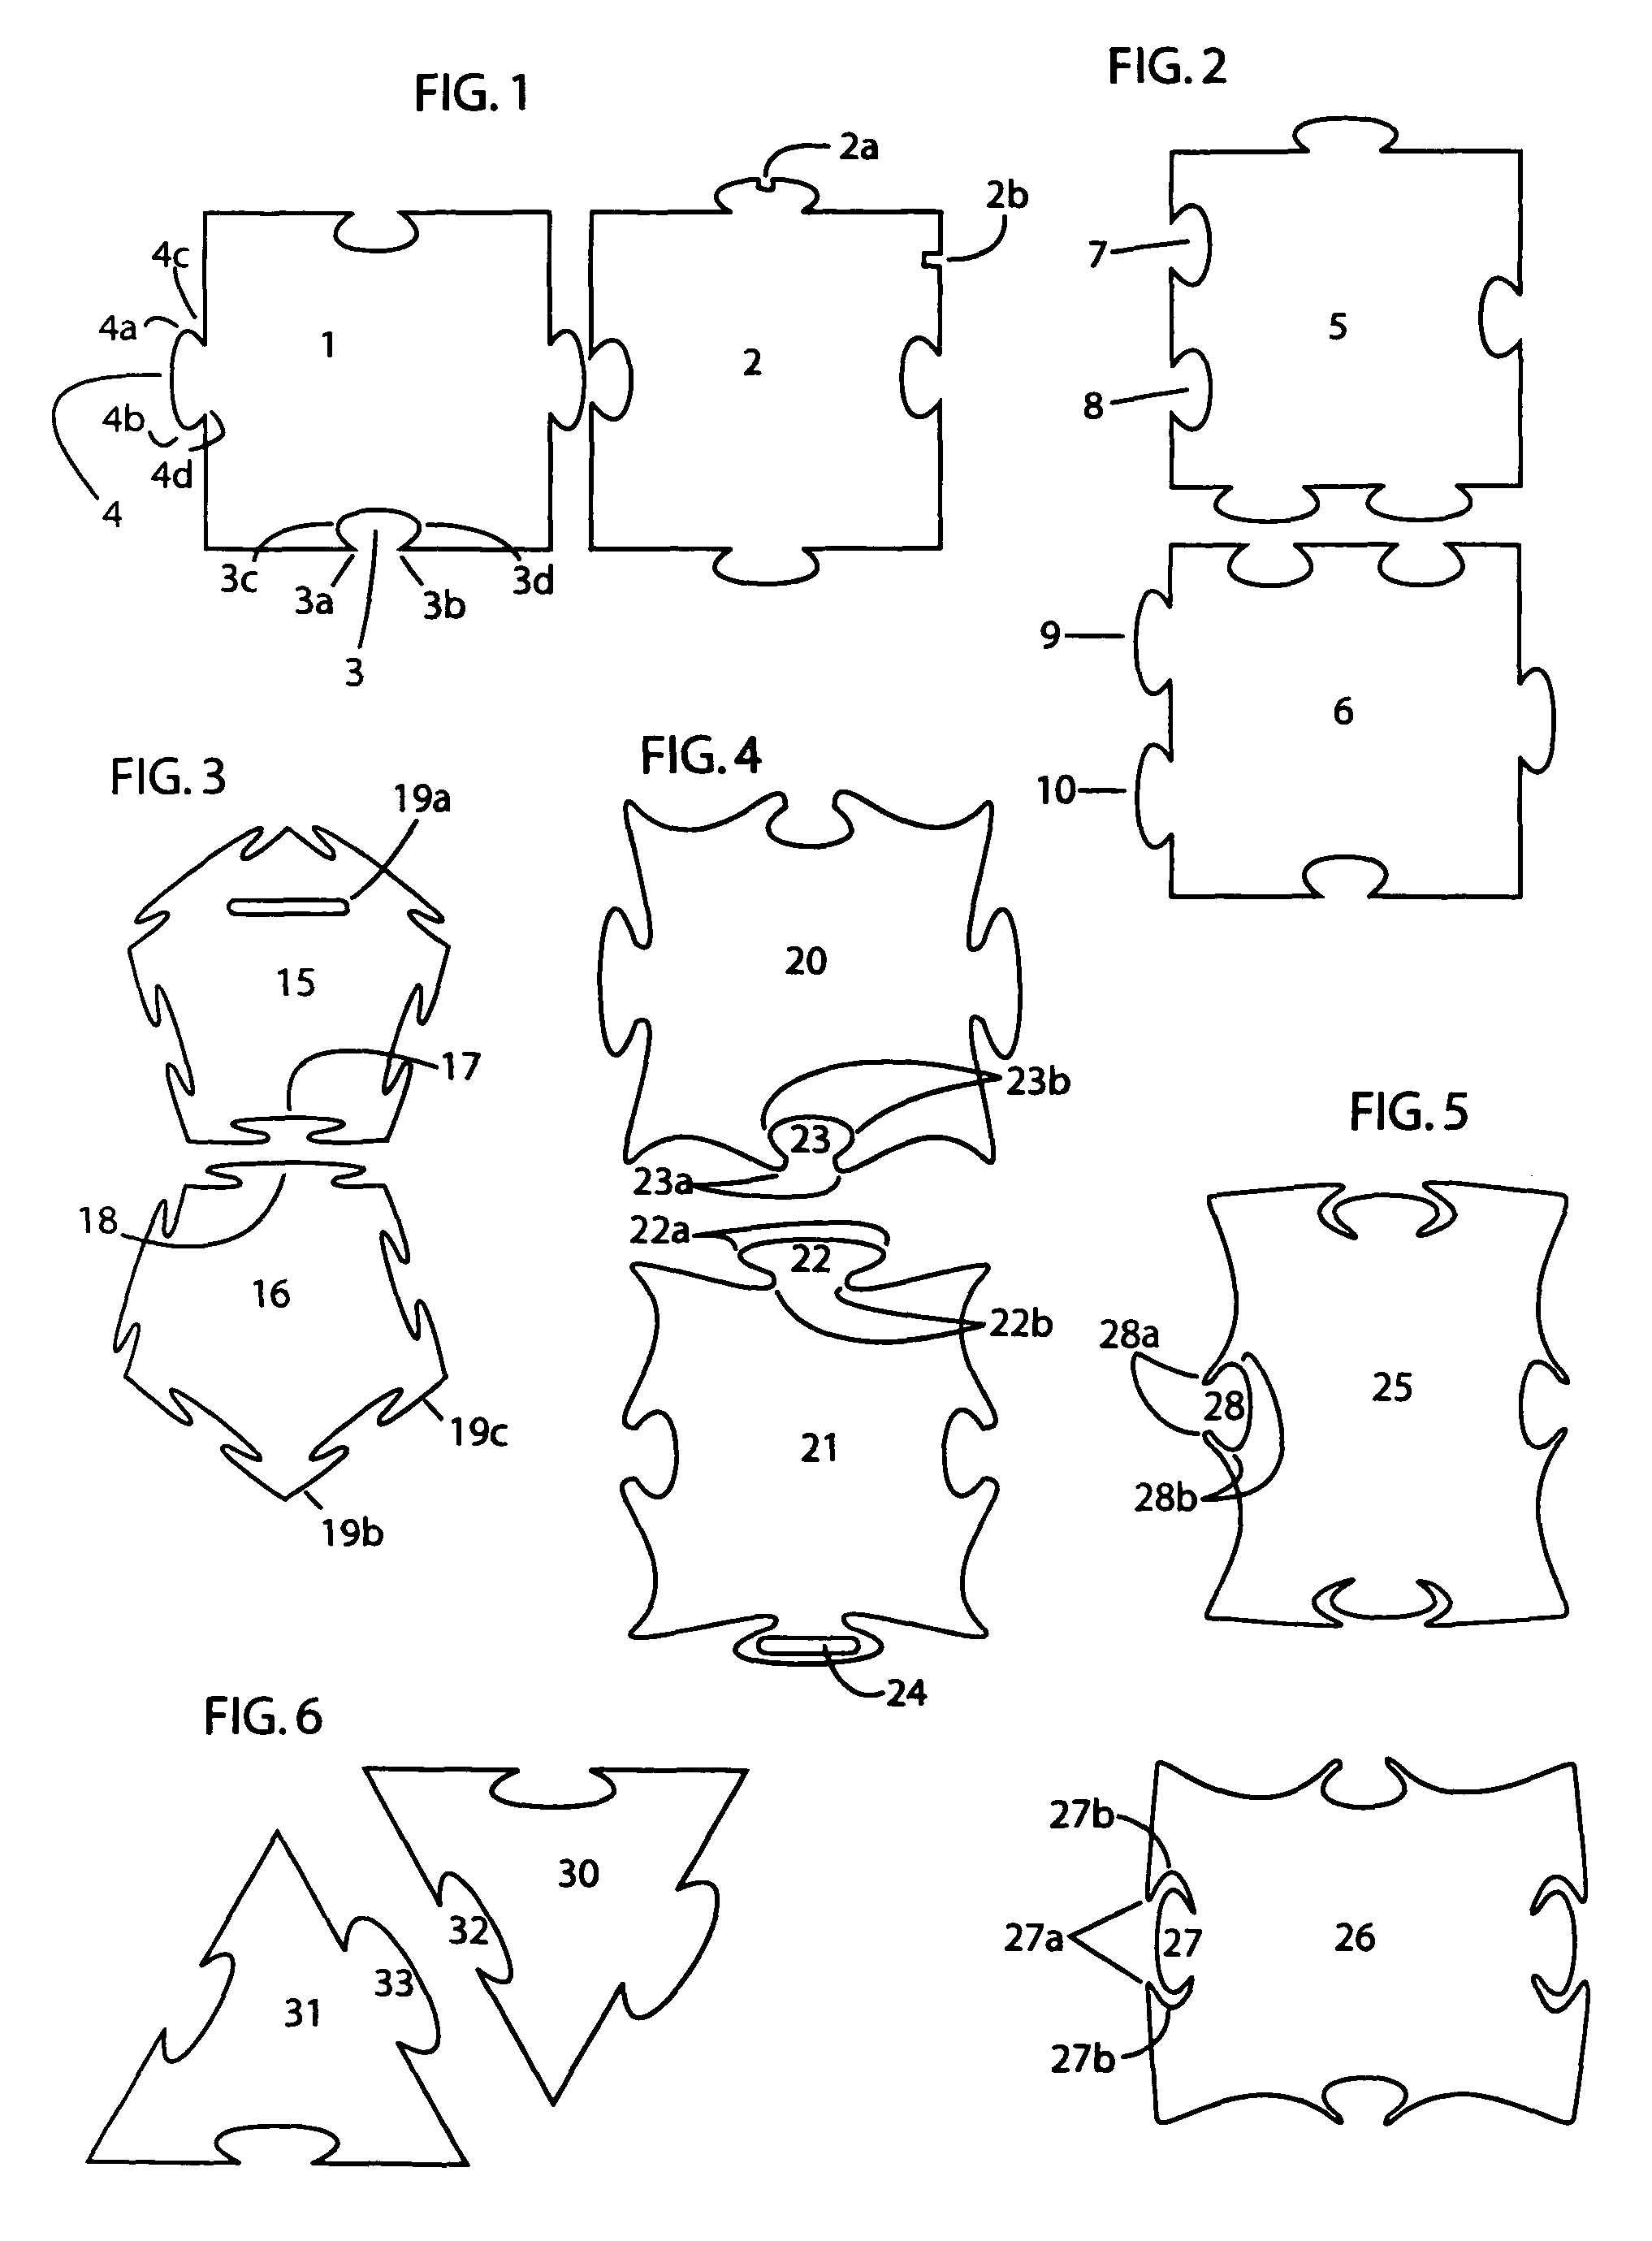 Universal disc-shaped connectors